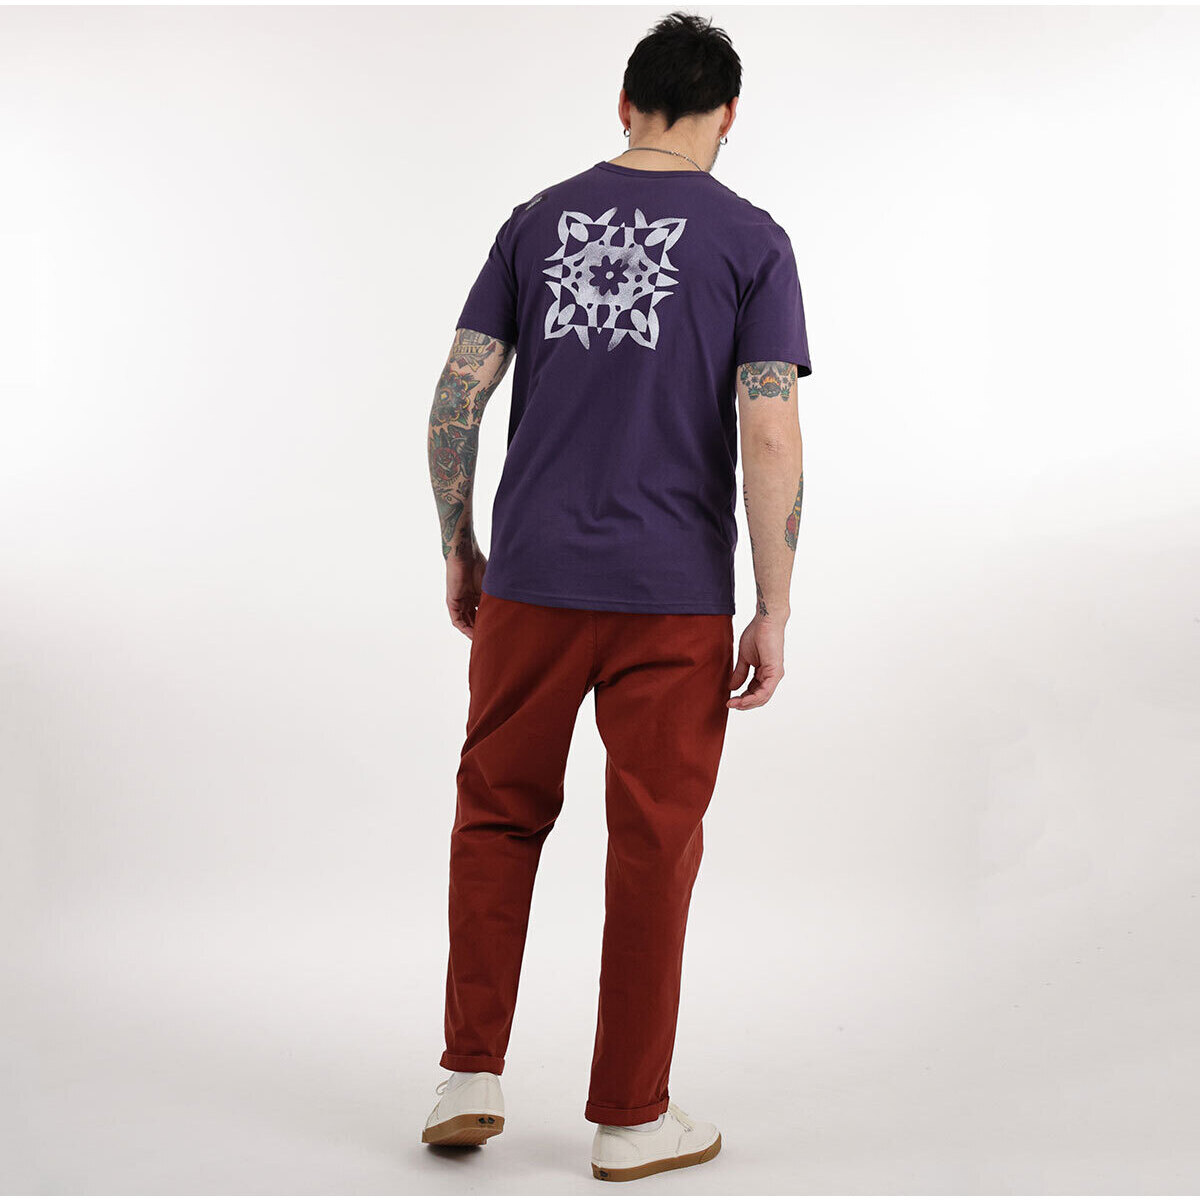 Oxbow Violet Tee-shirt manches courtes imprimé P2THONY vfWrDddz